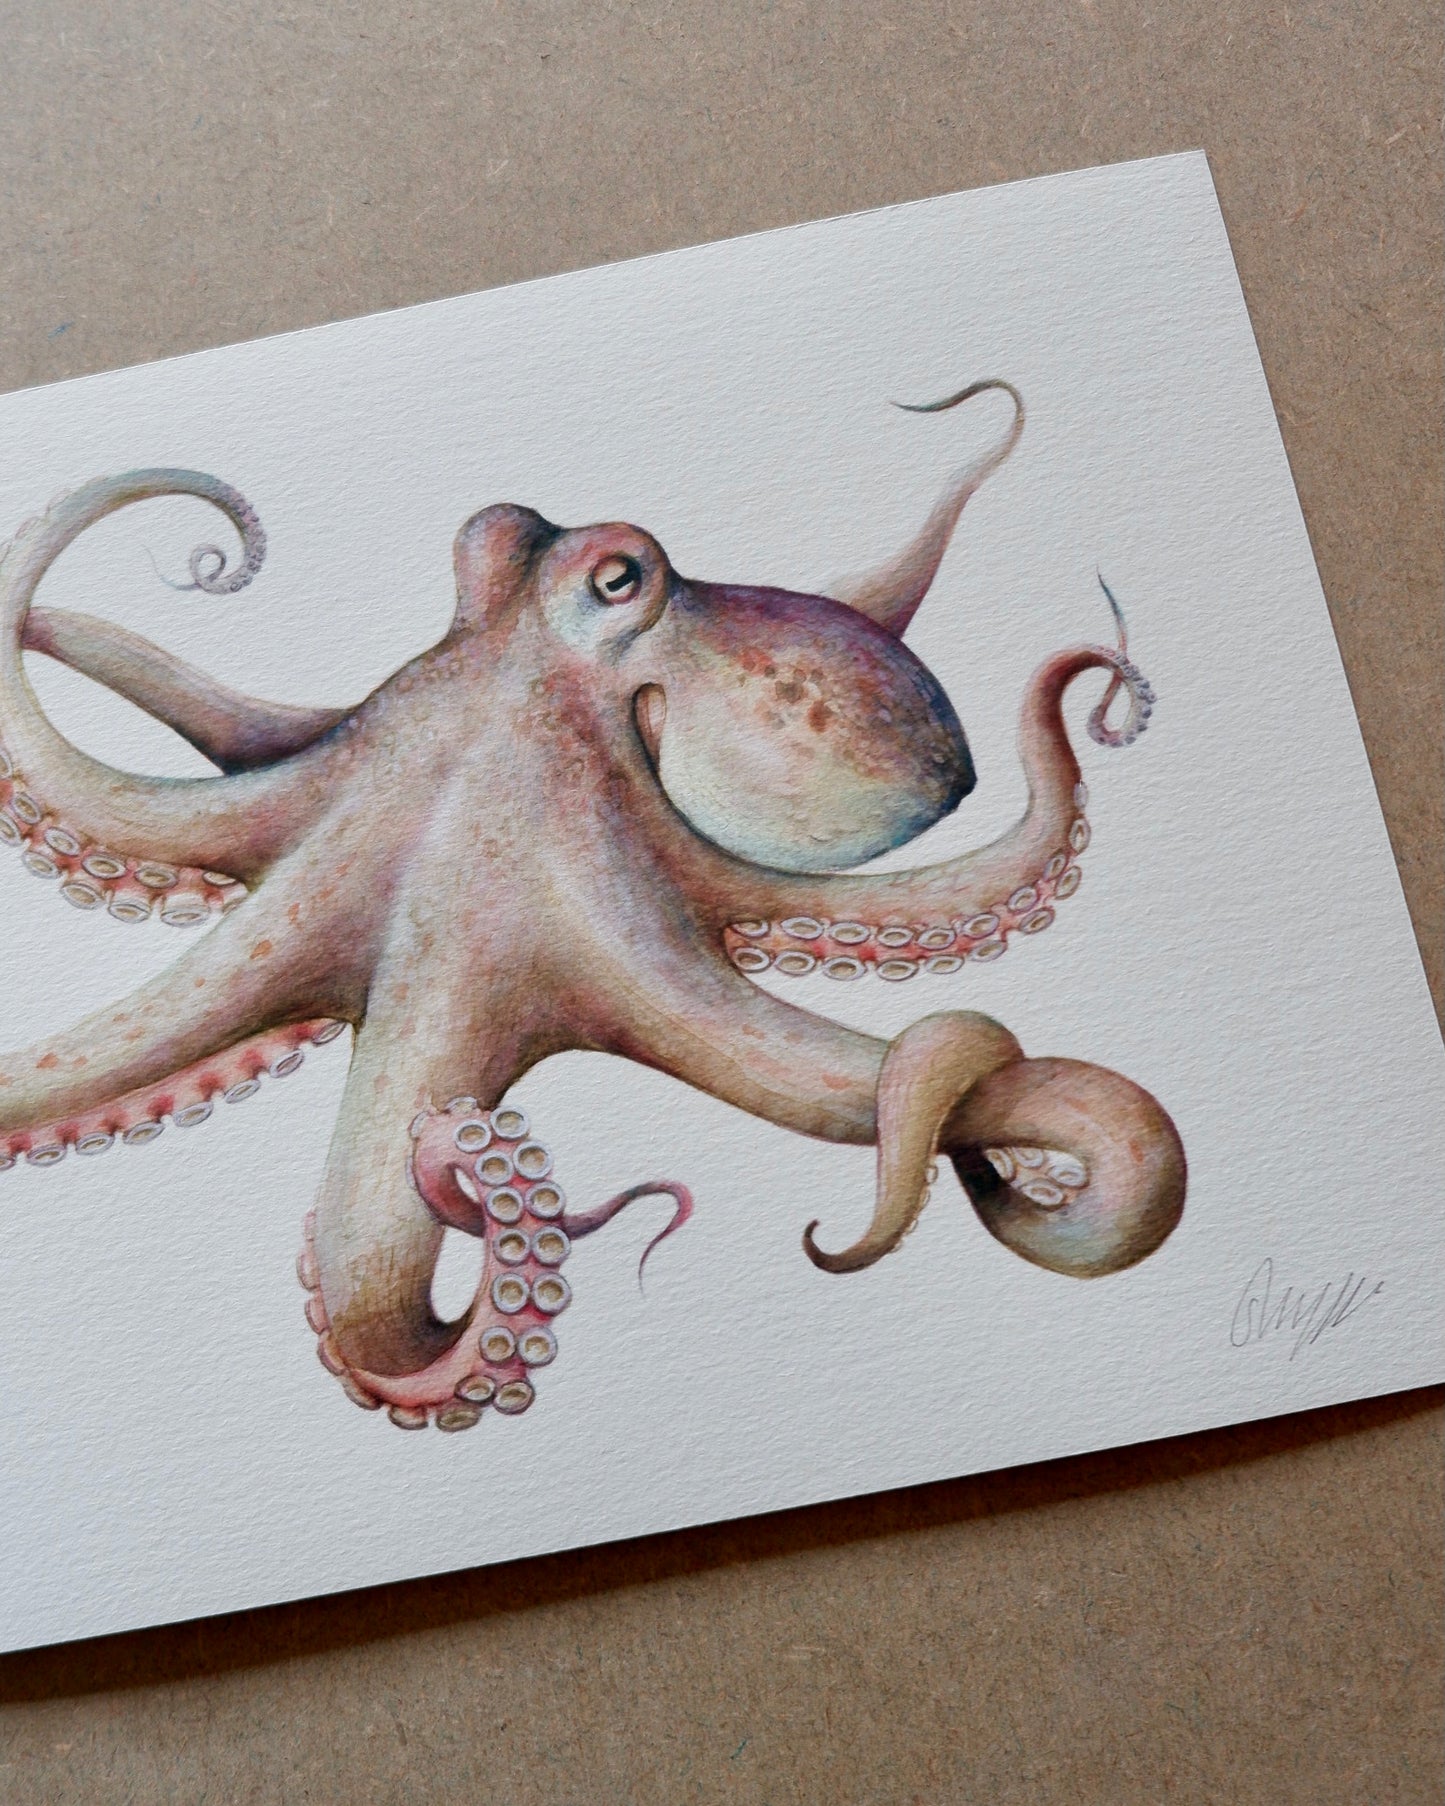  sophie myers artwork seaside watercolour fish wildlife print Octopus - A3 print